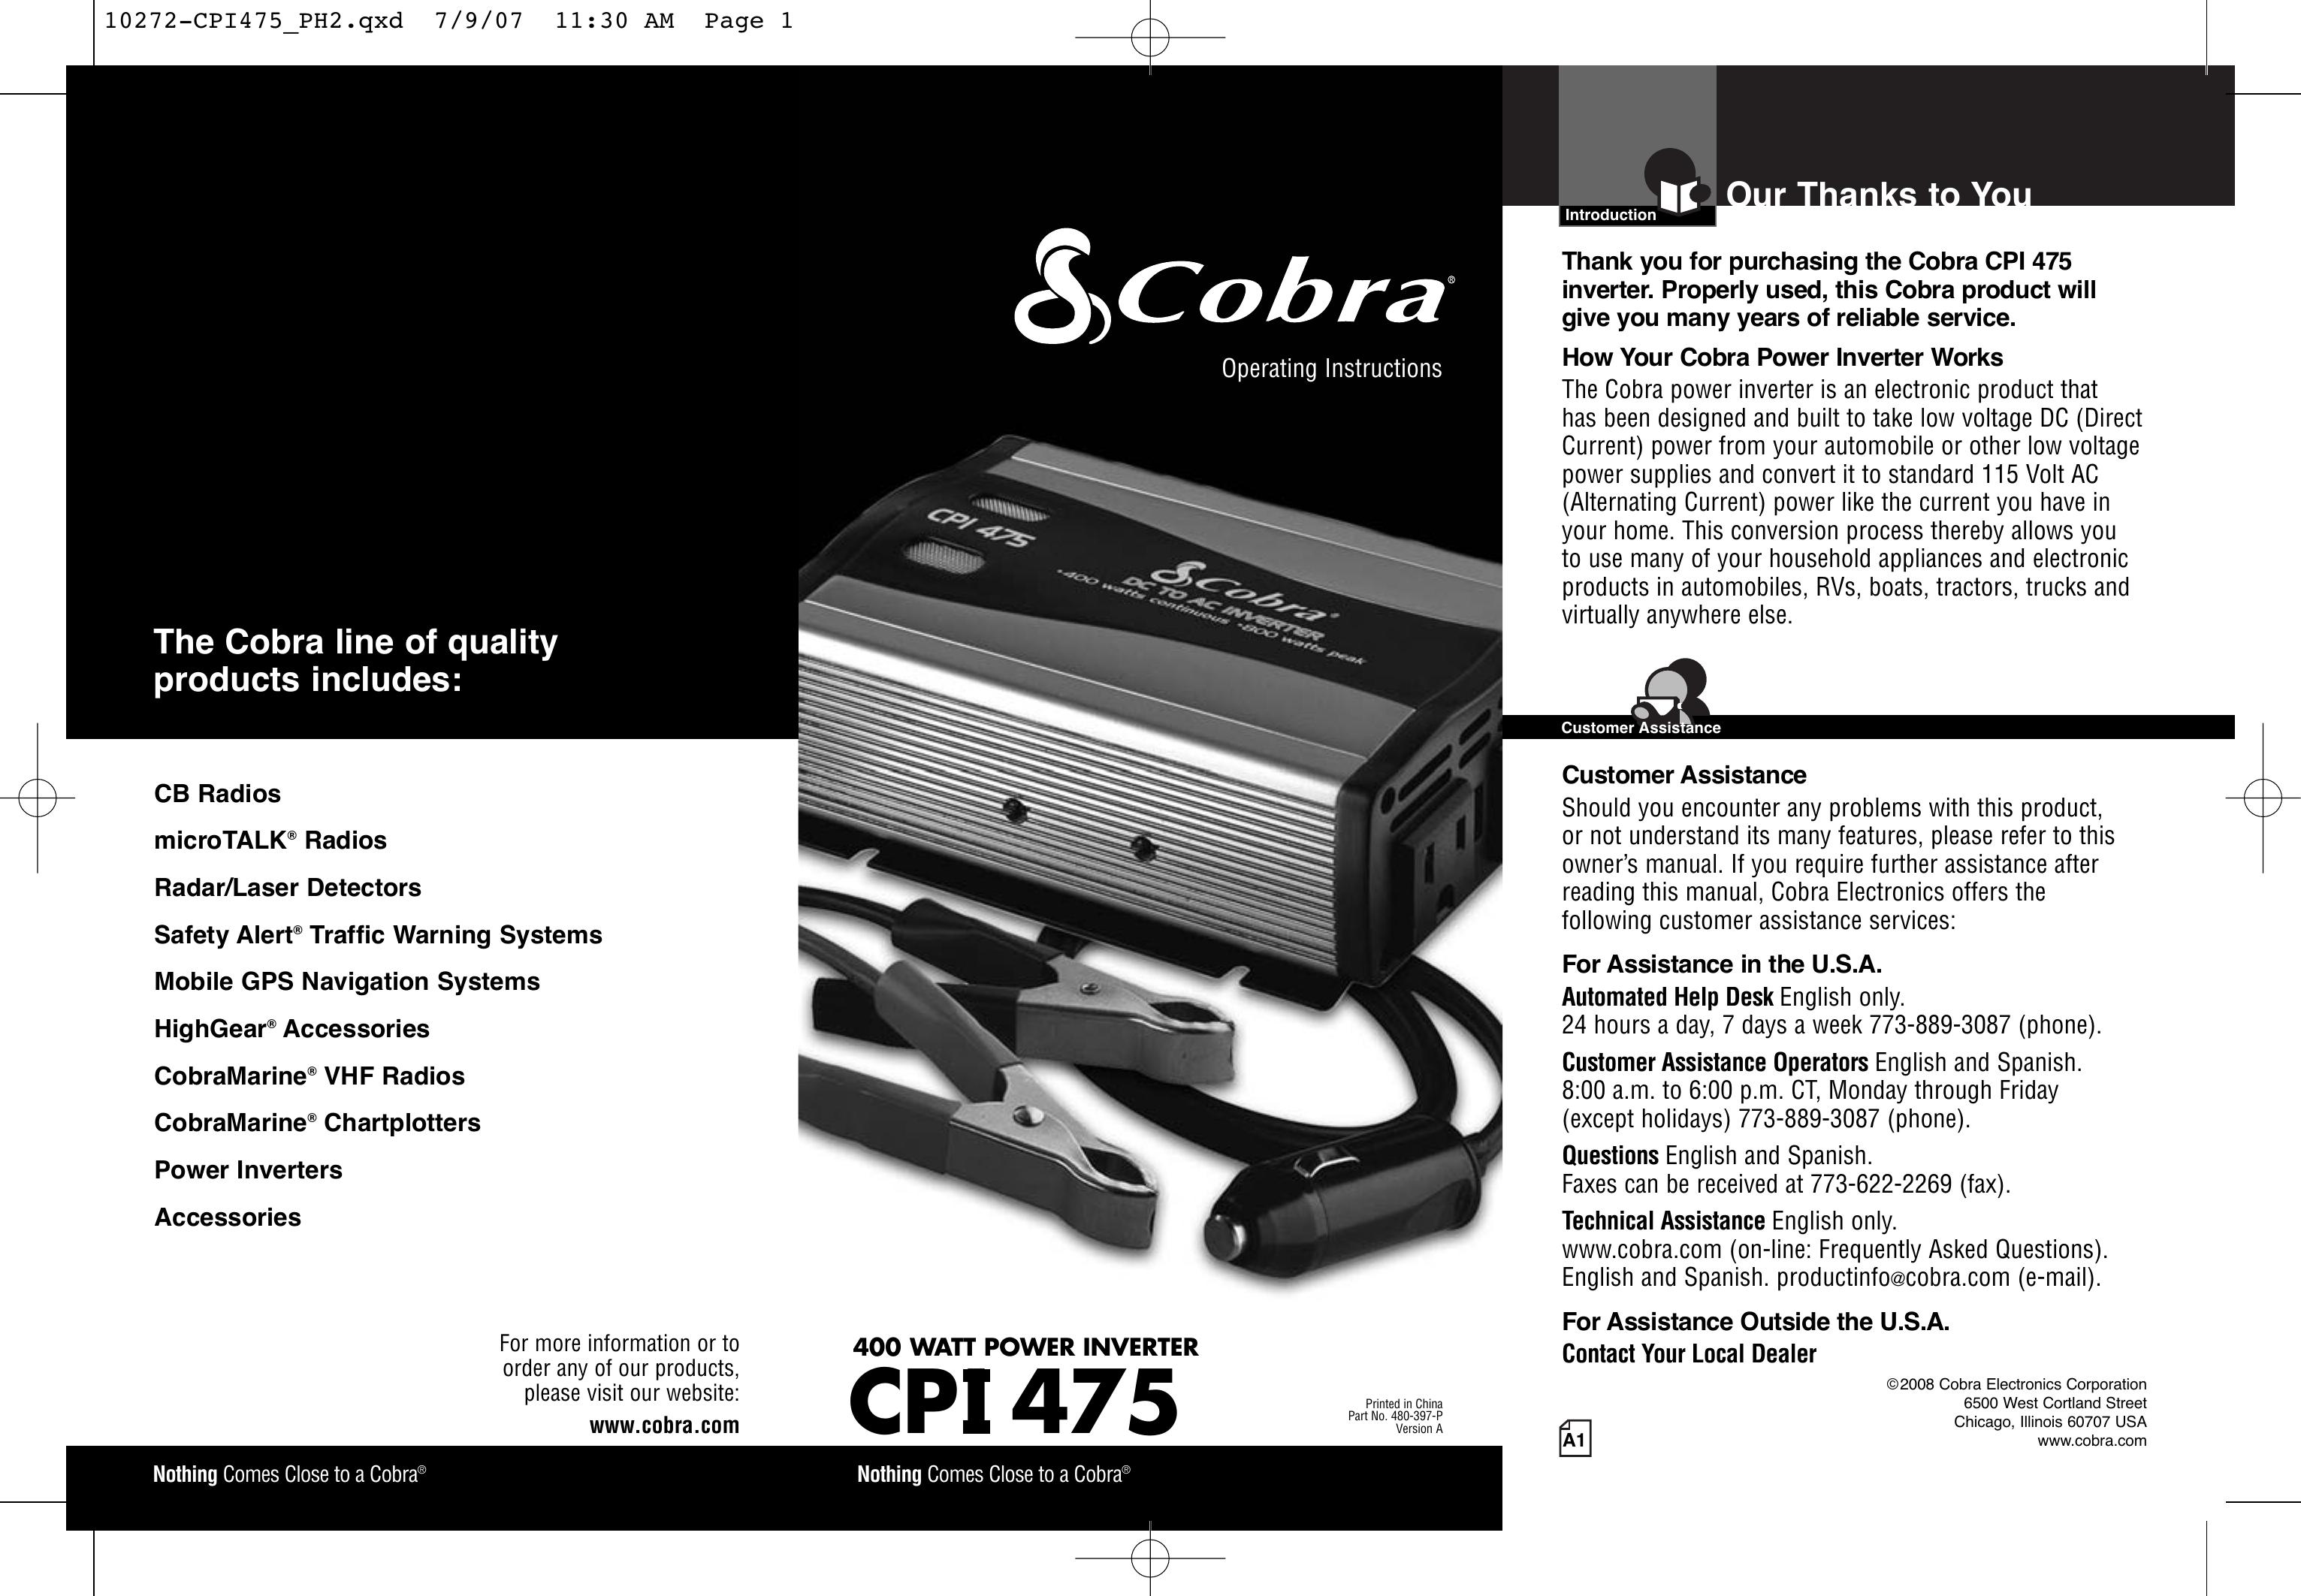 Cobra Electronics CPI 475 Marine Battery User Manual